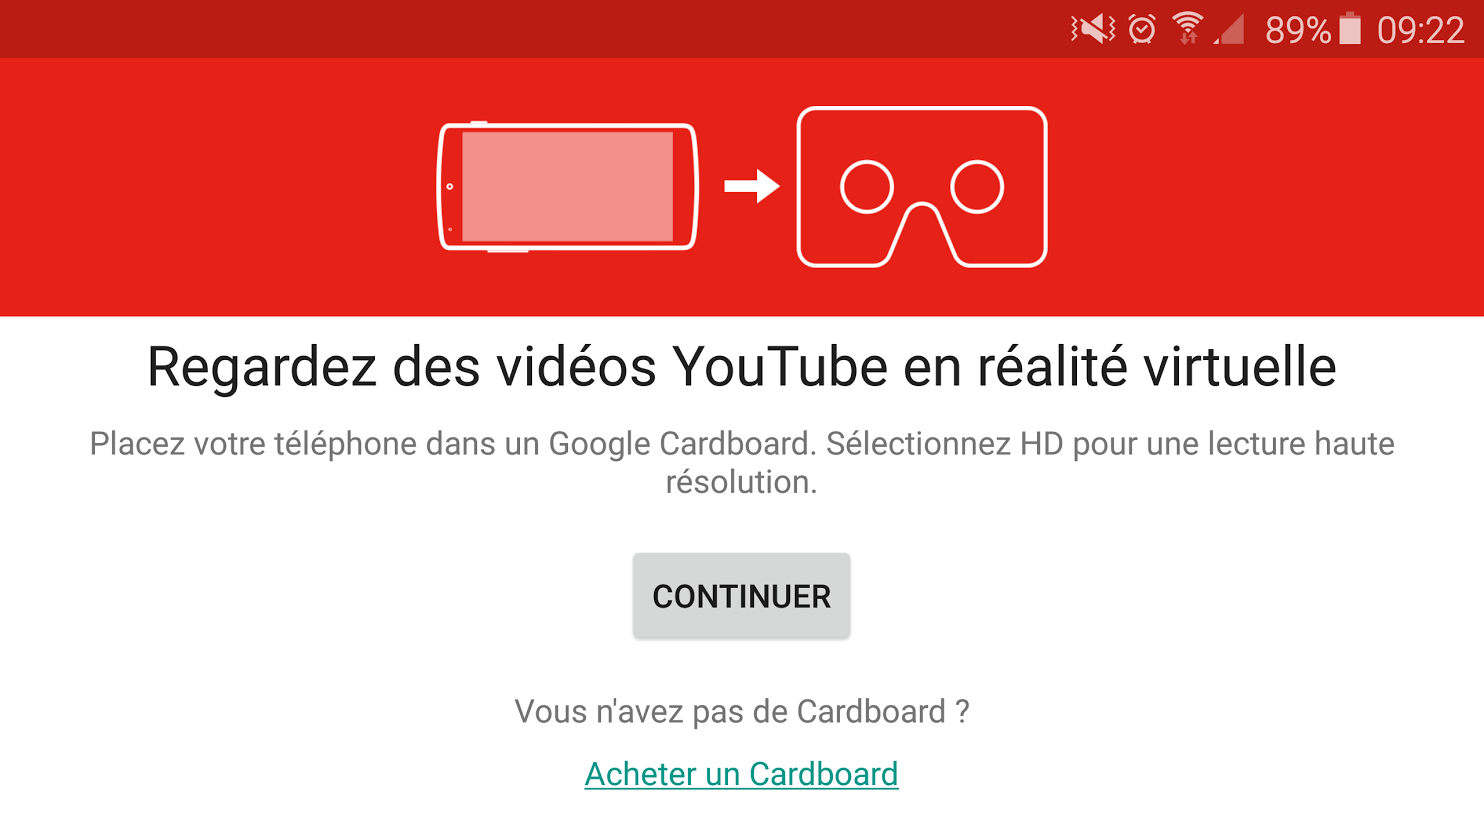 YouTube adapte toutes ses vidéos au Google Cardboard